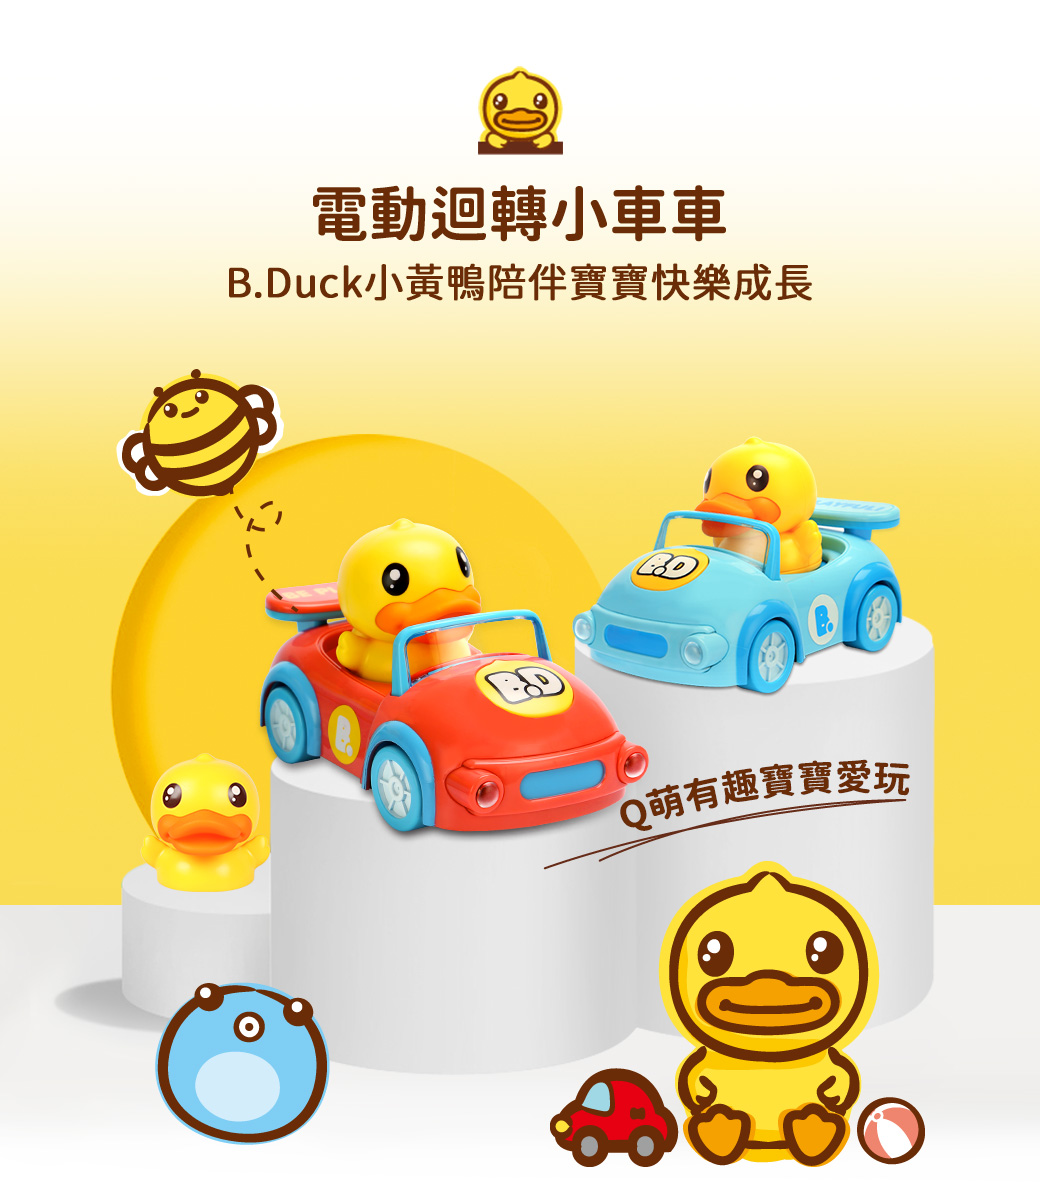 B.Duck 小黃鴨 電動迴轉玩具車 BD019 音樂聲光玩具